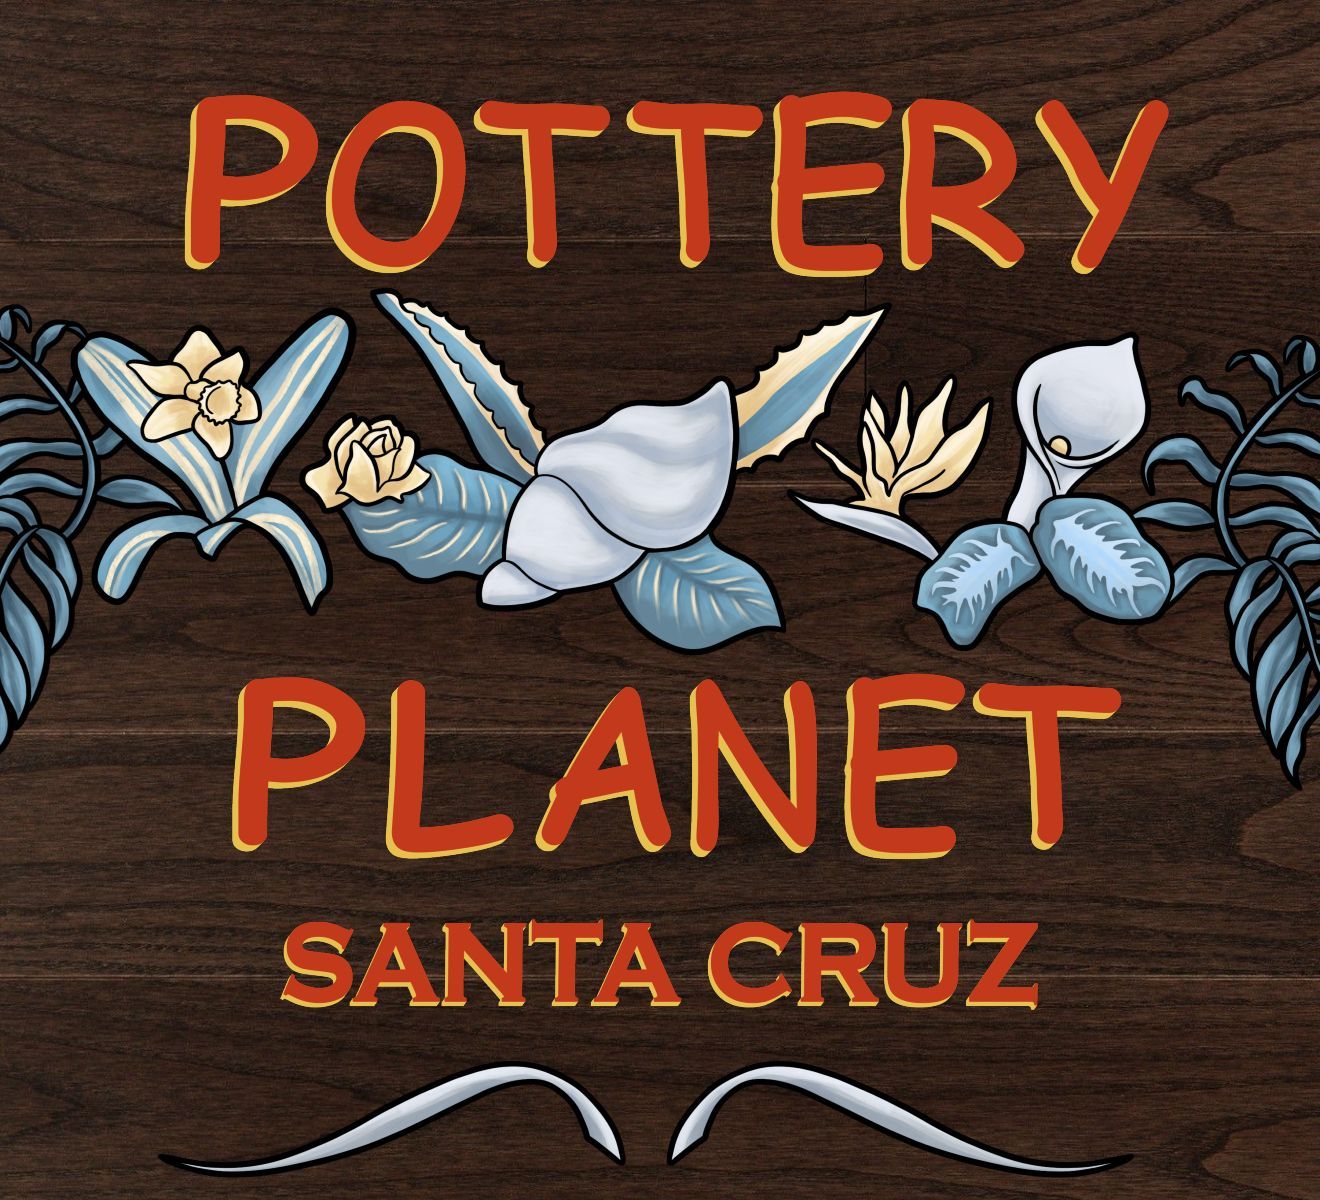 Pottery Planet - Santa Cruz logo